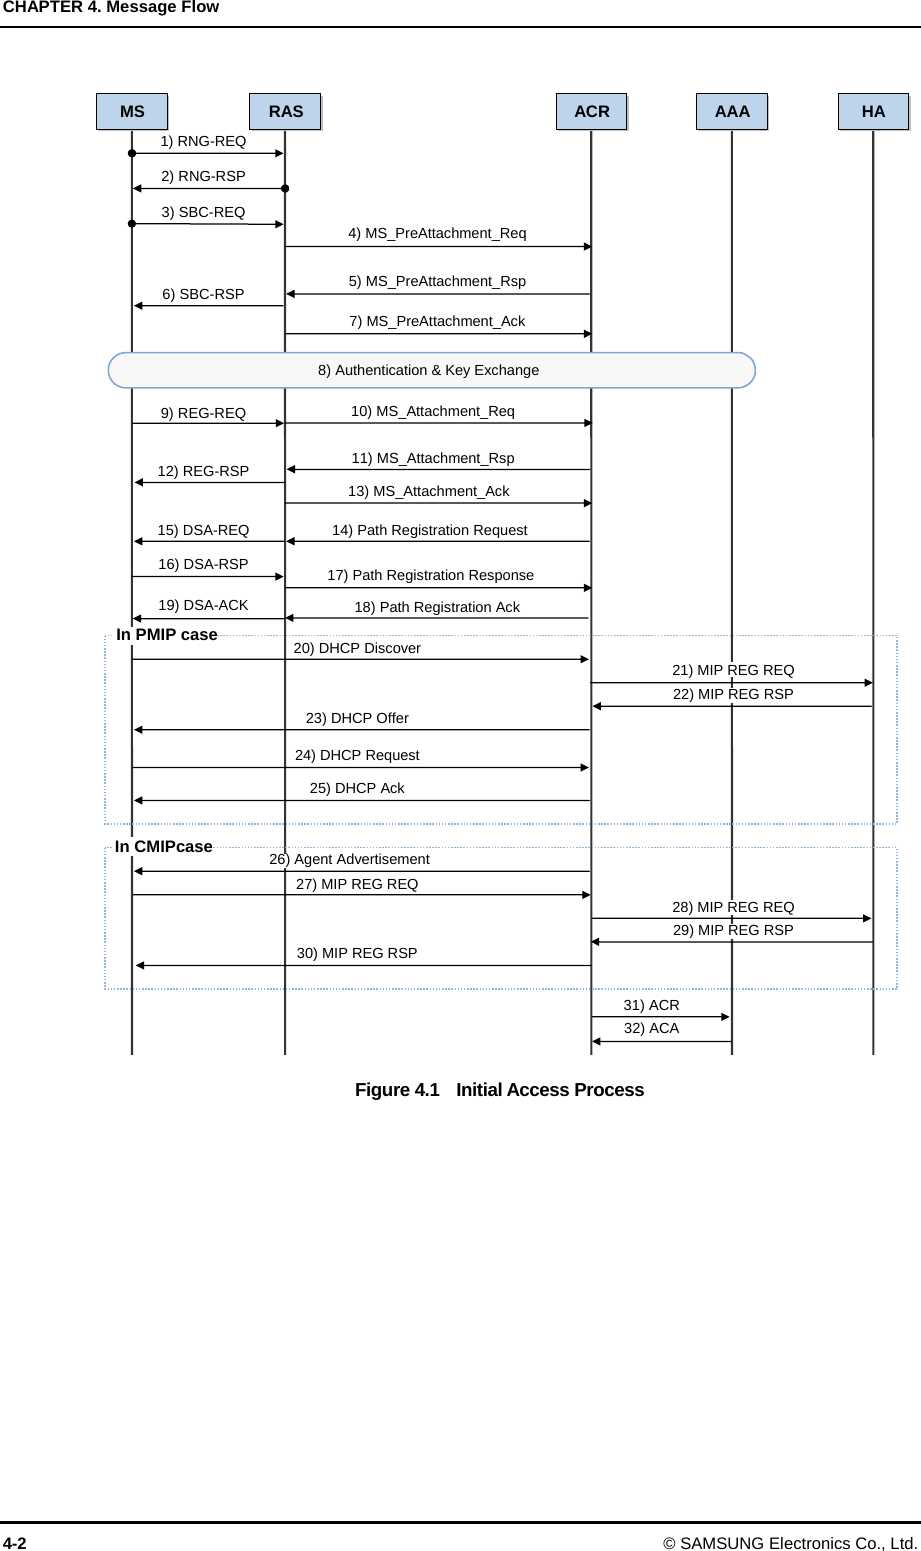 CHAPTER 4. Message Flow 4-2 © SAMSUNG Electronics Co., Ltd.  Figure 4.1    Initial Access Process  MS  RAS  ACR AAA 8) Authentication &amp; Key Exchange HAIn PMIP case In CMIPcase 1) RNG-REQ 2) RNG-RSP 3) SBC-REQ 6) SBC-RSP 9) REG-REQ 12) REG-RSP 15) DSA-REQ 16) DSA-RSP 19) DSA-ACK 20) DHCP Discover 23) DHCP Offer 24) DHCP Request 25) DHCP Ack 27) MIP REG REQ 30) MIP REG RSP 26) Agent Advertisement 7) MS_PreAttachment_Ack 10) MS_Attachment_Req 11) MS_Attachment_Rsp 13) MS_Attachment_Ack 17) Path Registration Response 14) Path Registration Request21) MIP REG REQ 22) MIP REG RSP 28) MIP REG REQ 29) MIP REG RSP 31) ACR 32) ACA 18) Path Registration Ack 4) MS_PreAttachment_Req 5) MS_PreAttachment_Rsp 